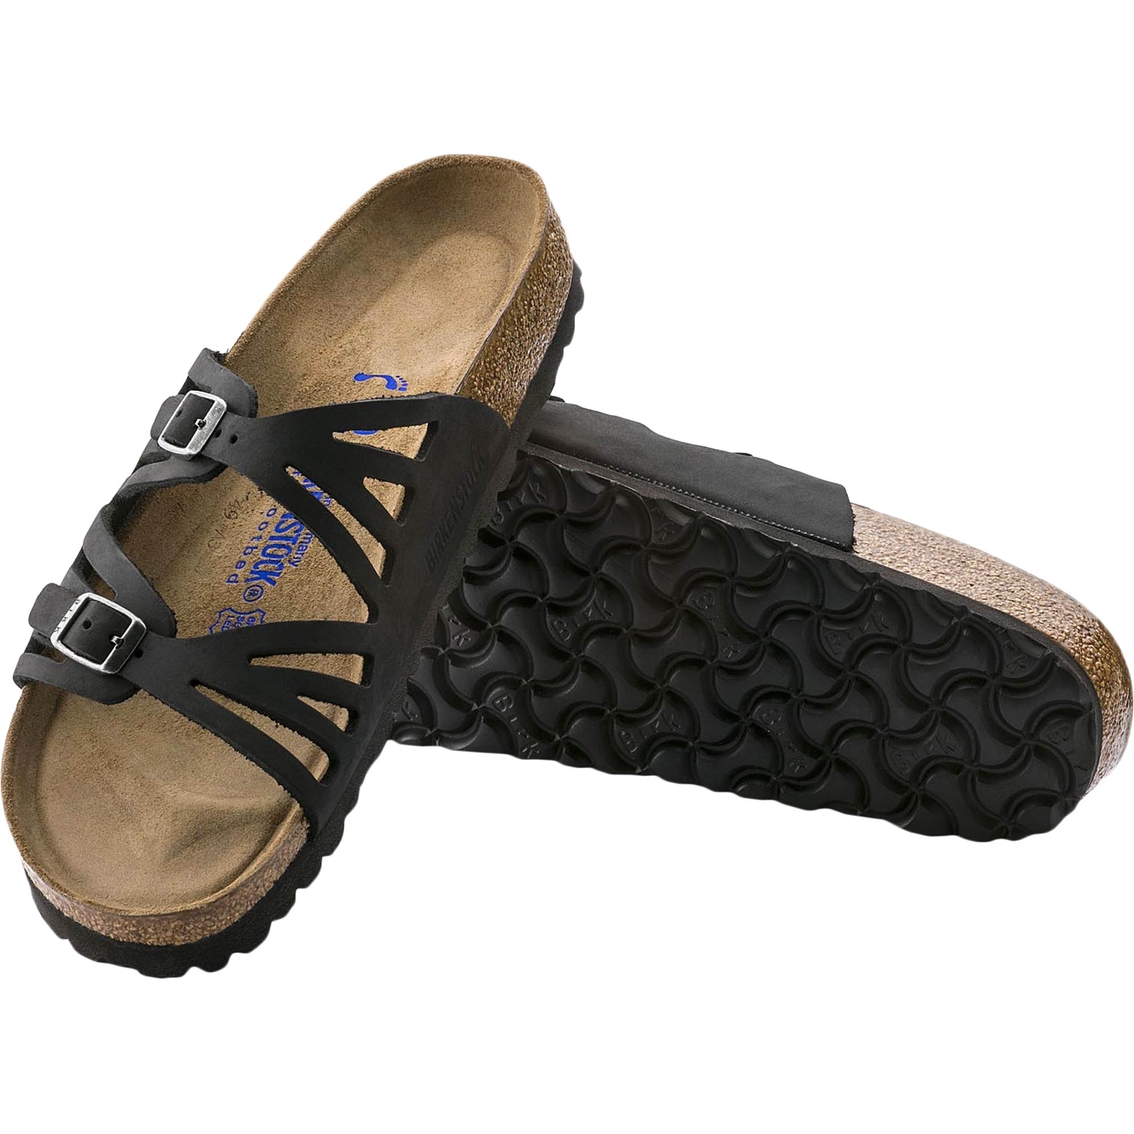 Birkenstock Women's Granada Two Strap Sandals | Sandals | Shoes | Shop ...